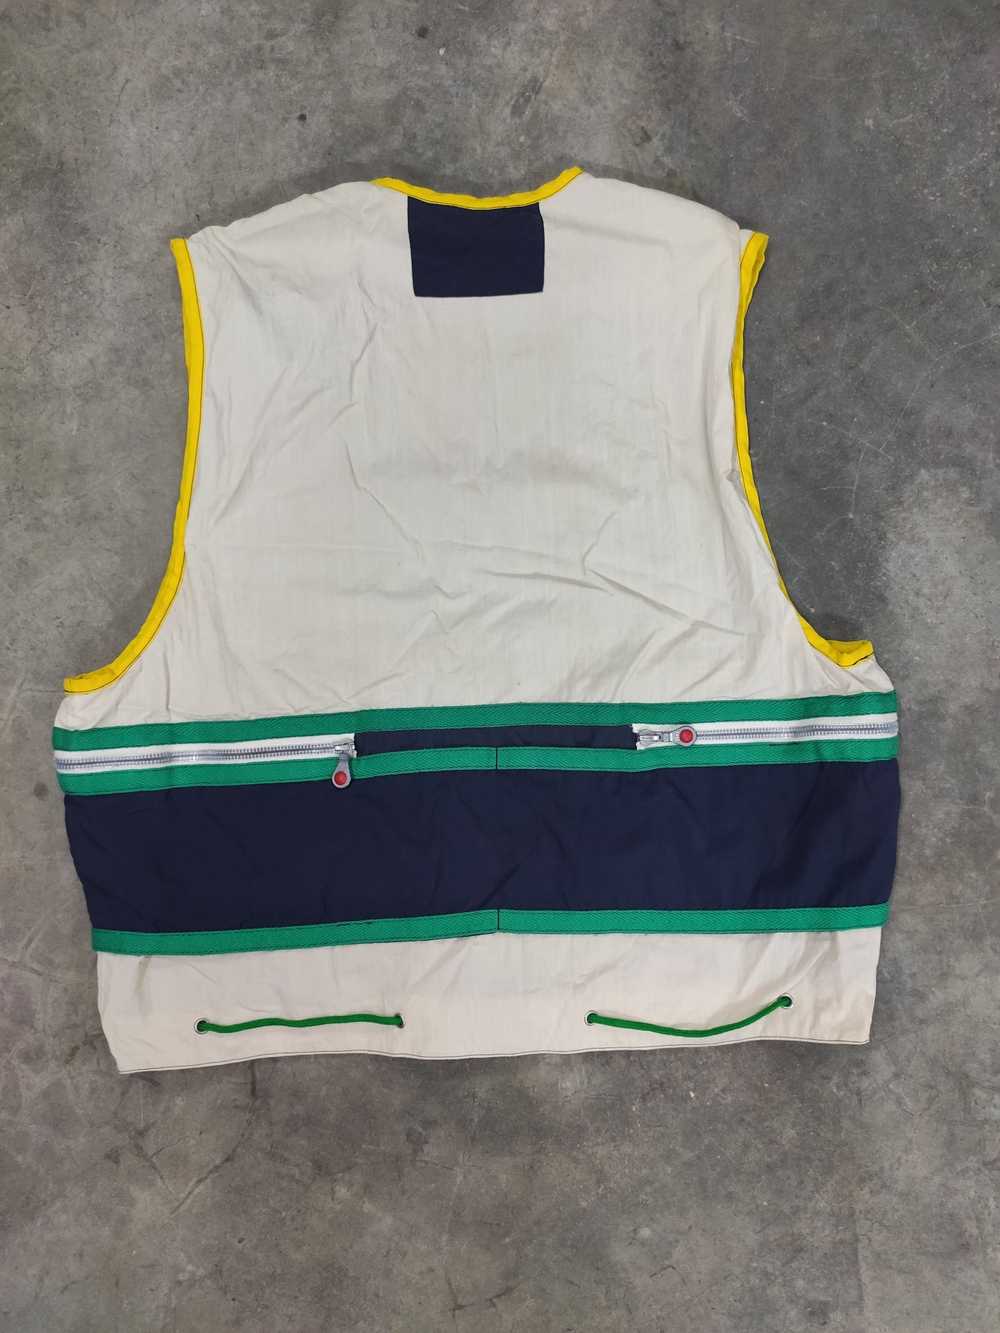 Racing × Sports Specialties PIAA SPORTS vest raci… - image 5